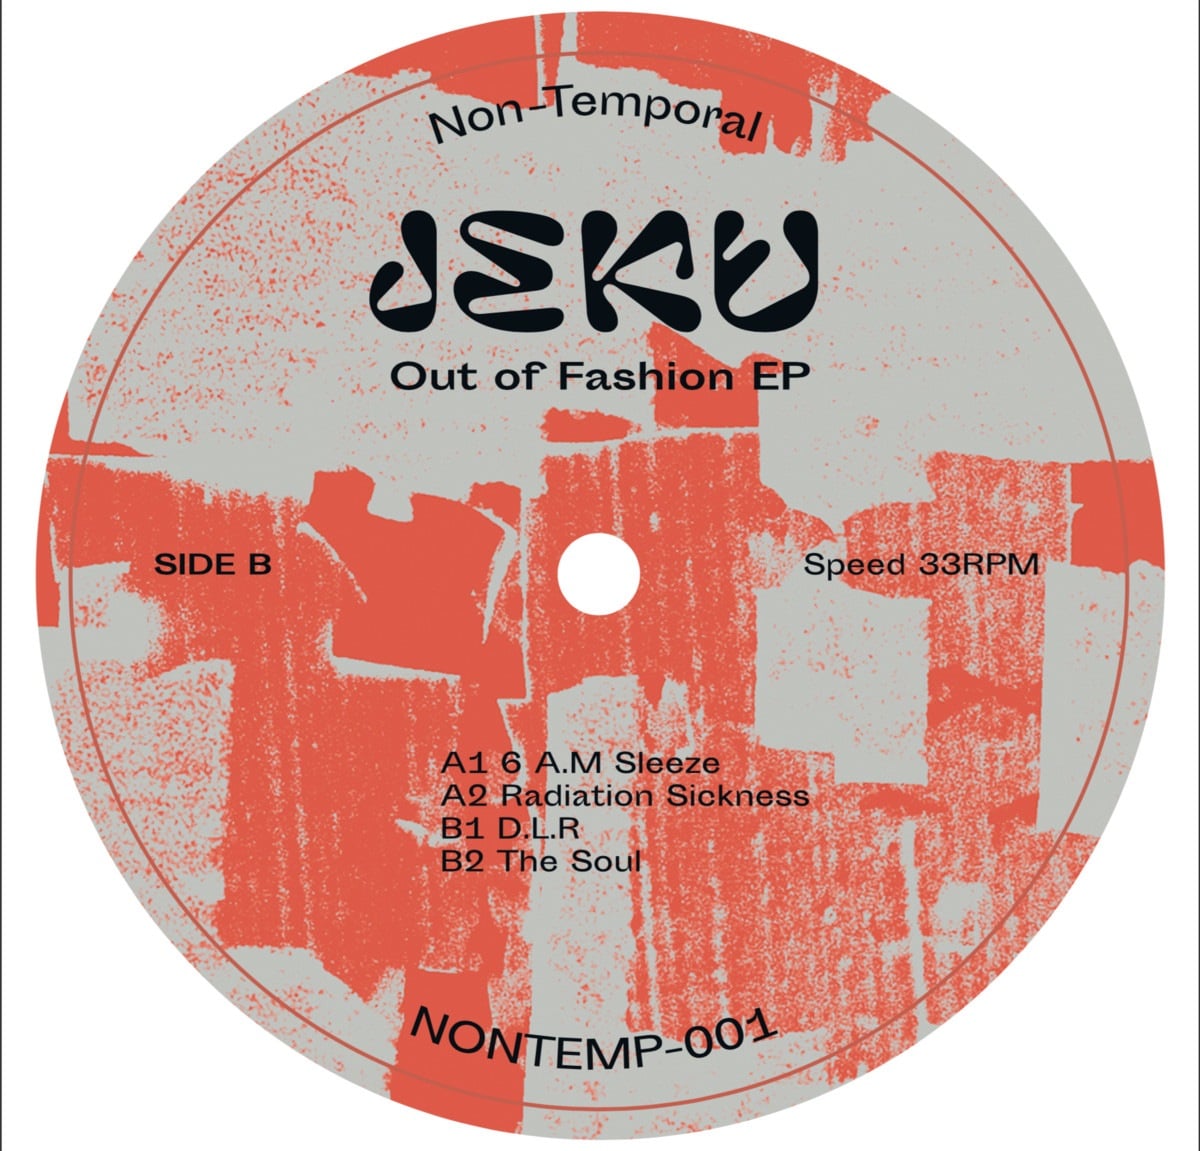 Jeku - Out Of Fashion EP - NONTEMP-001 - NON-TEMPORAL